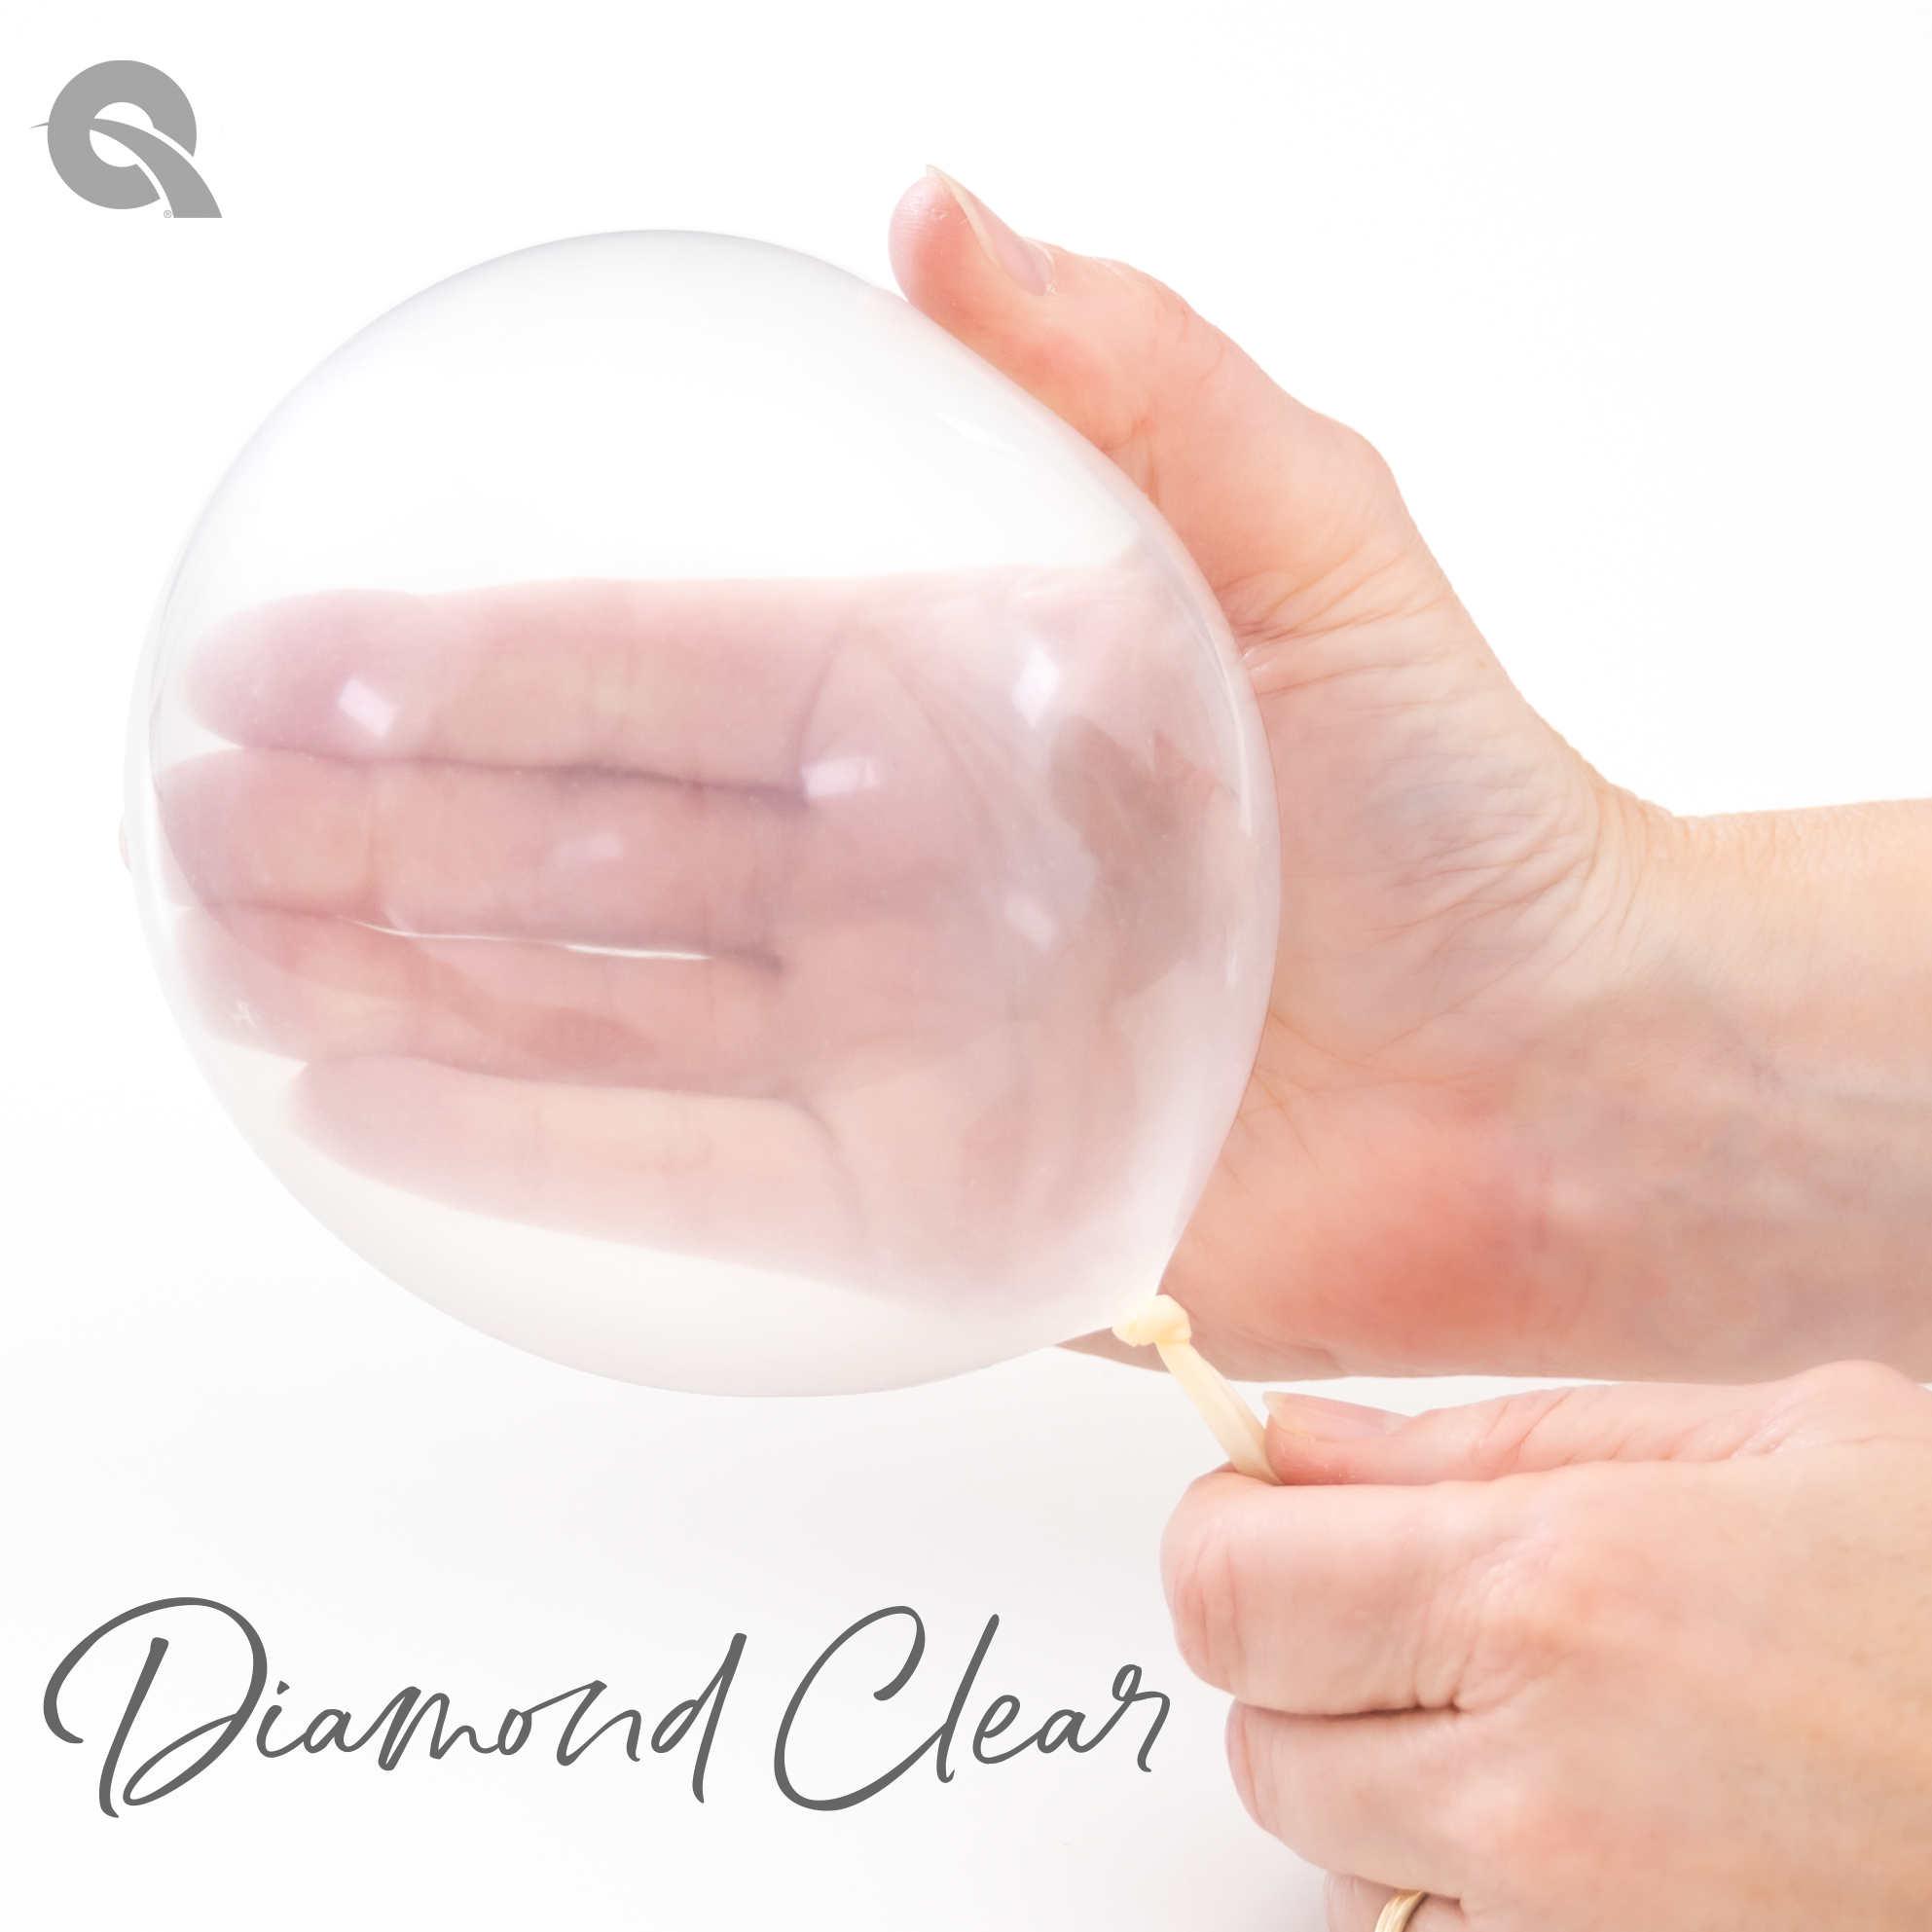 16" Qualatex Jewel Diamond Clear Latex Balloons | 50 Count